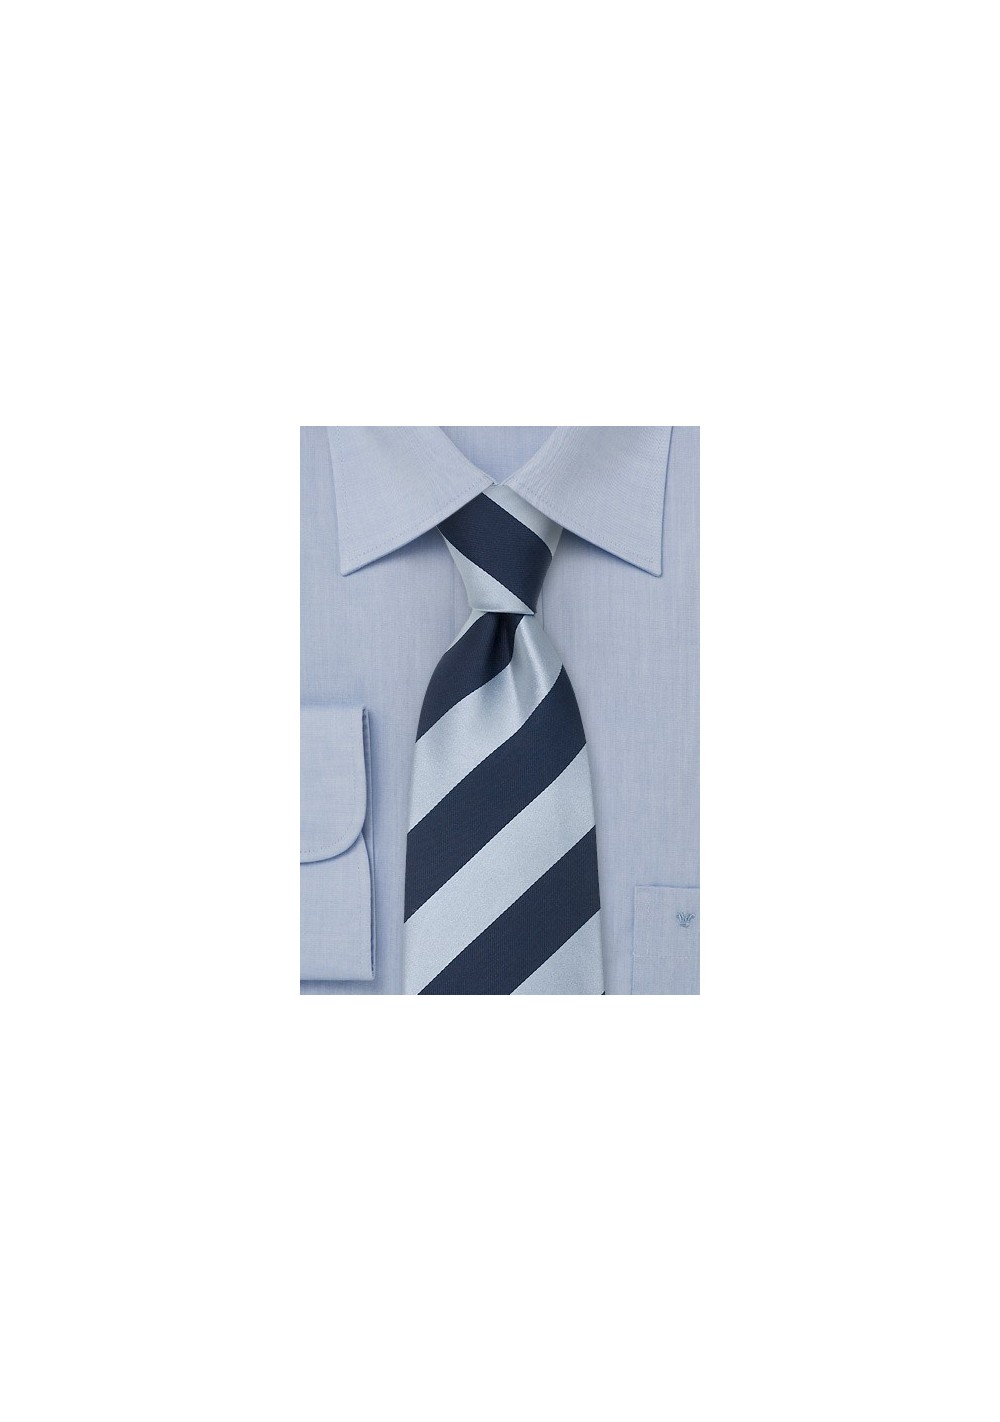 Blue Striped Neckties - Silk tie by Parsley